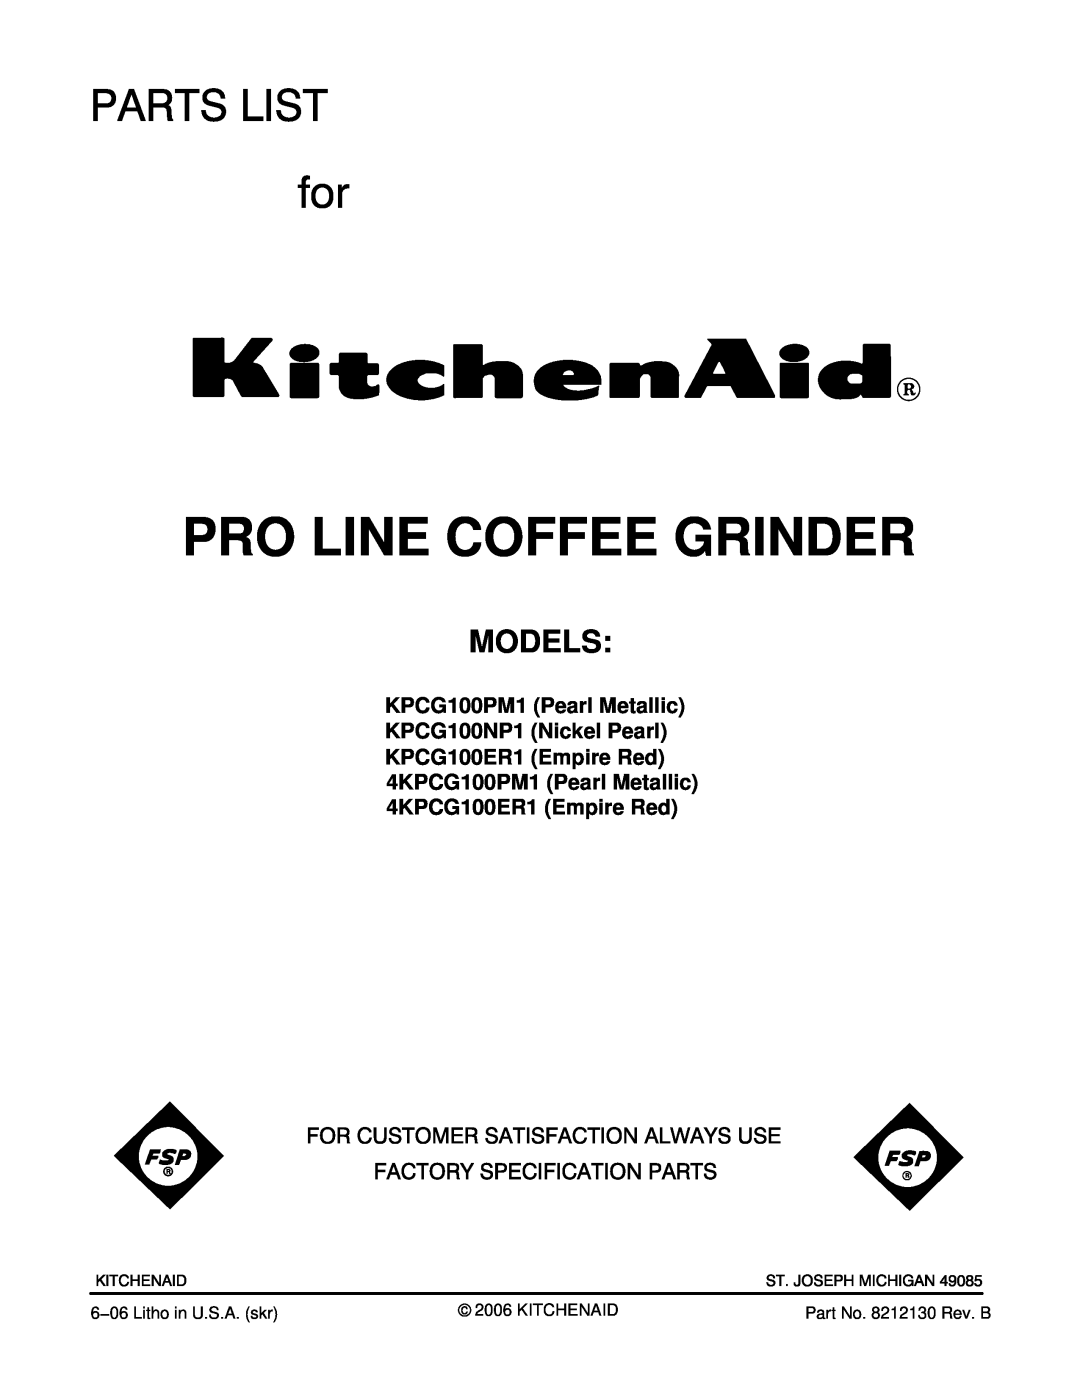 KitchenAid 4KPCG100PM1 manual Models, KPCG100PM1 Pearl Metallic KPCG100NP1 Nickel Pearl, 4KPCG100ER1 Empire Red 